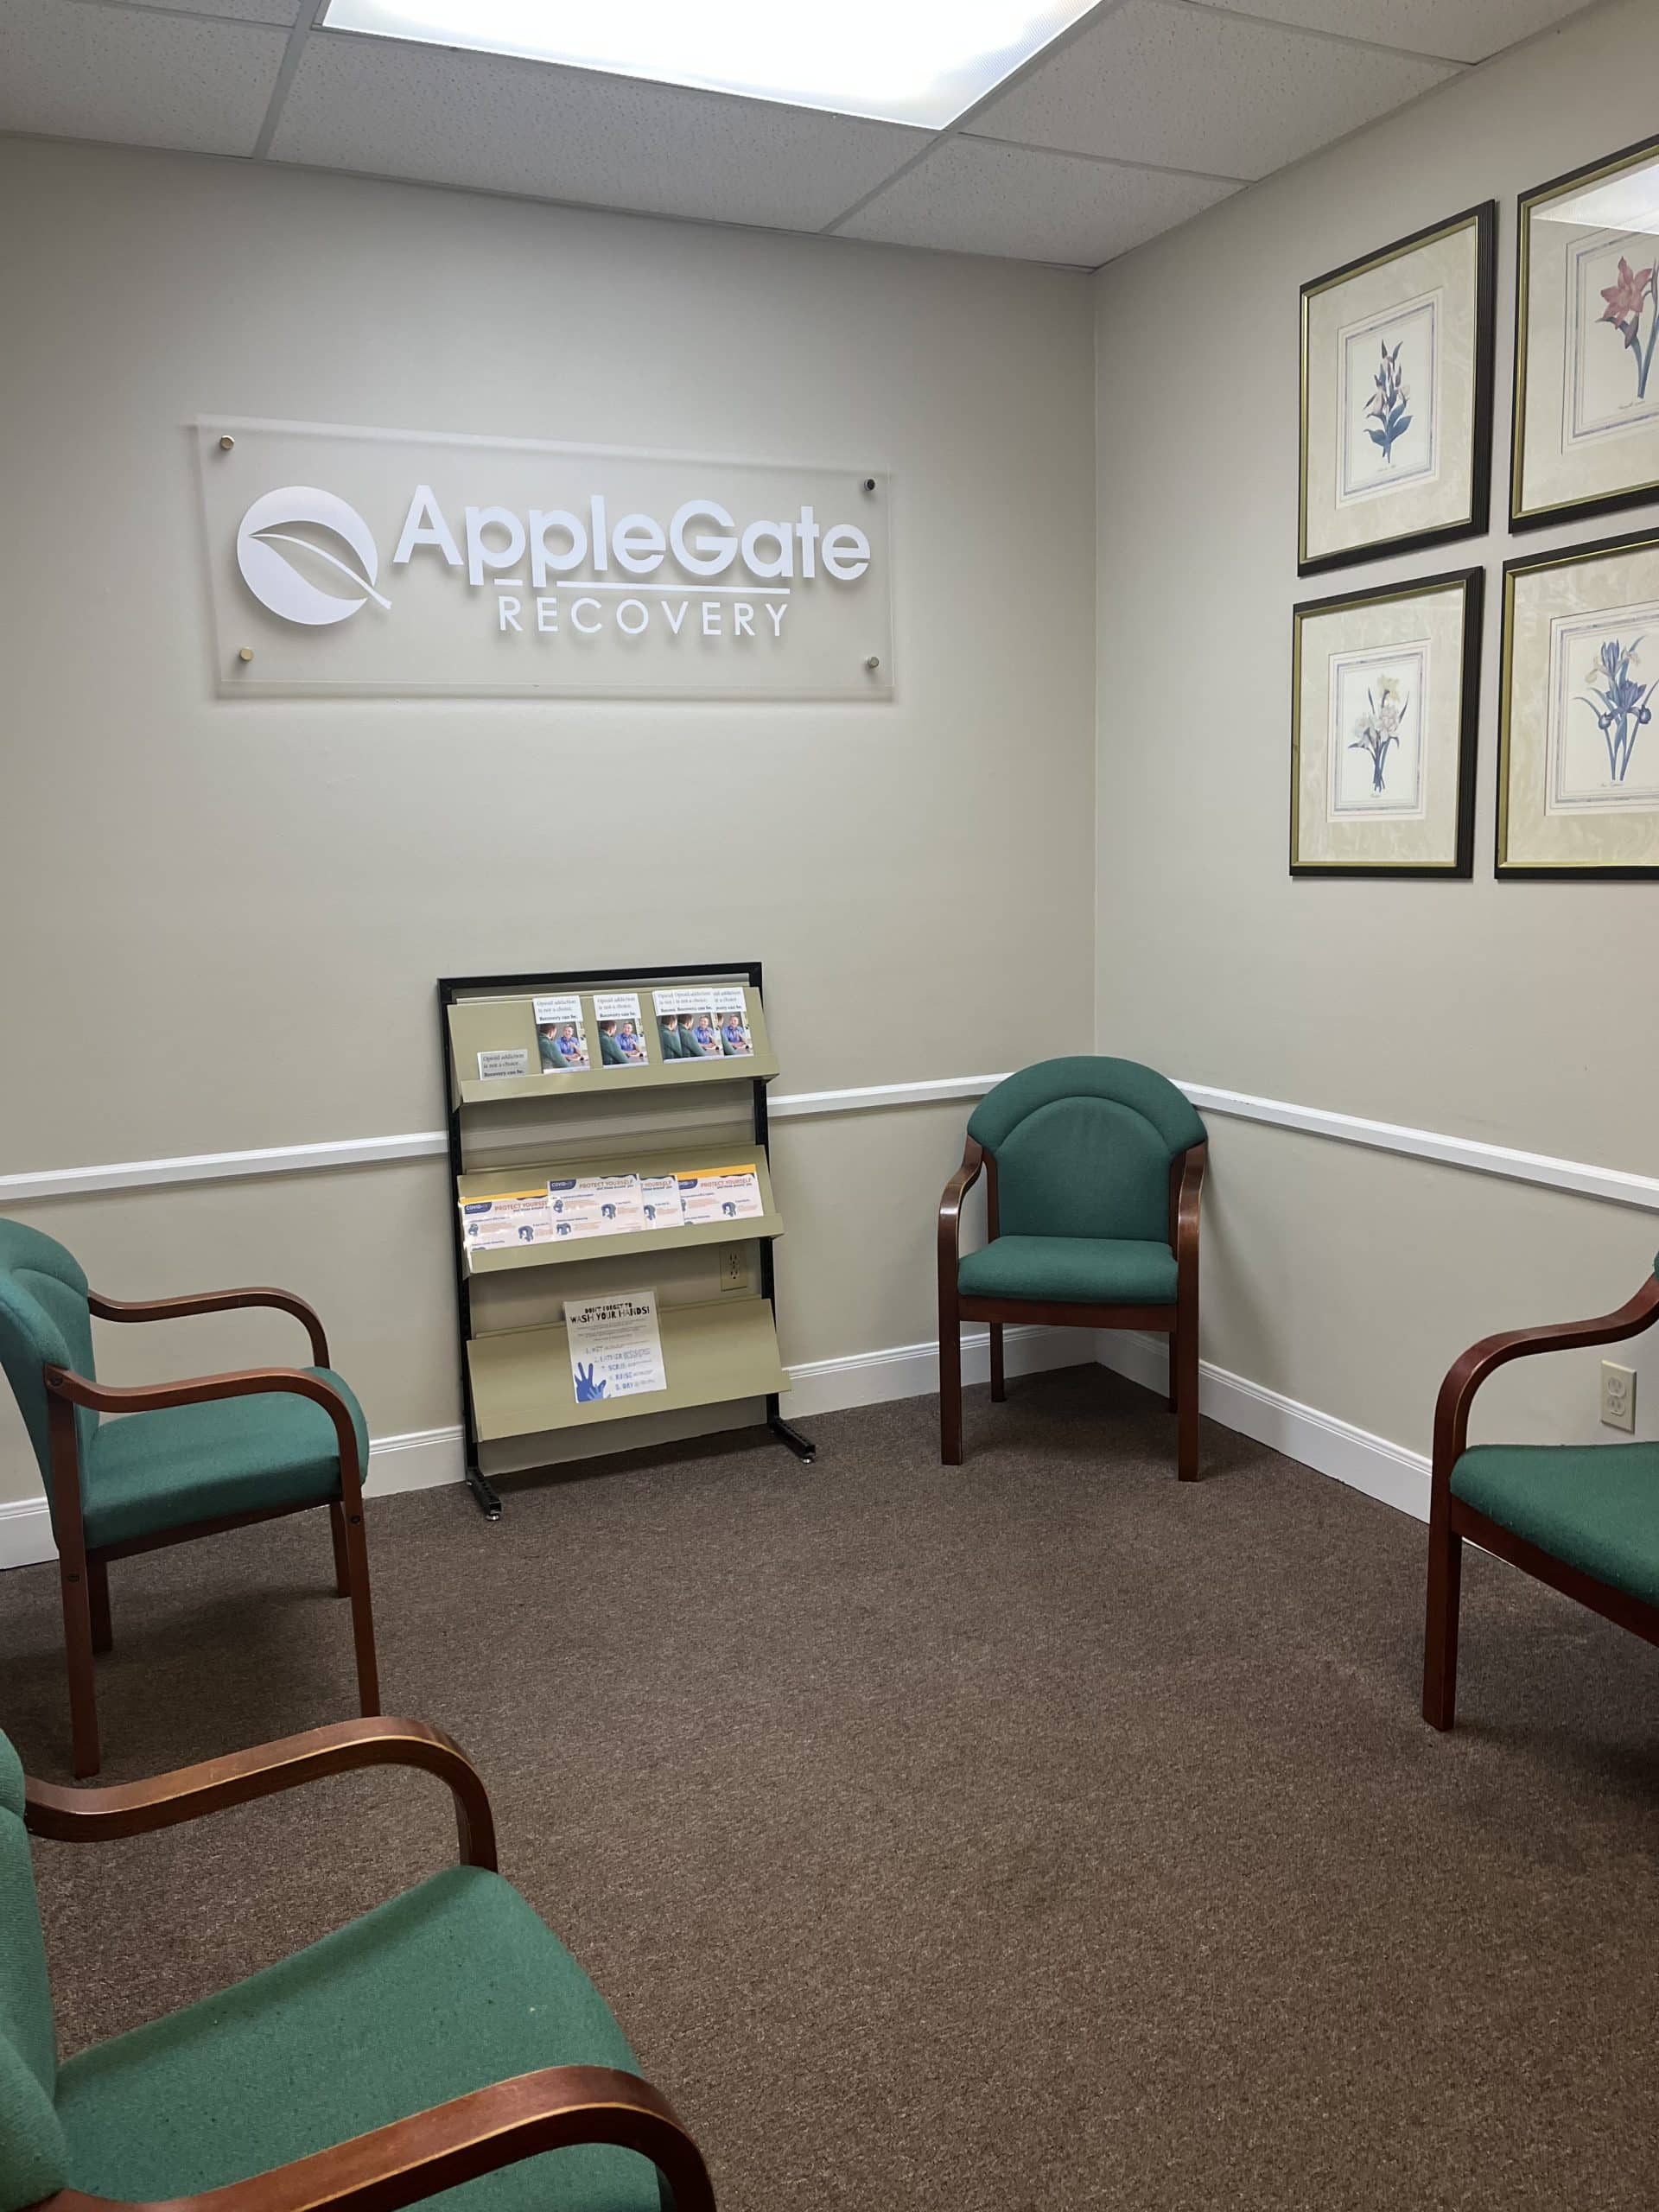 AppleGate Recovery lobby in Slidell, LA